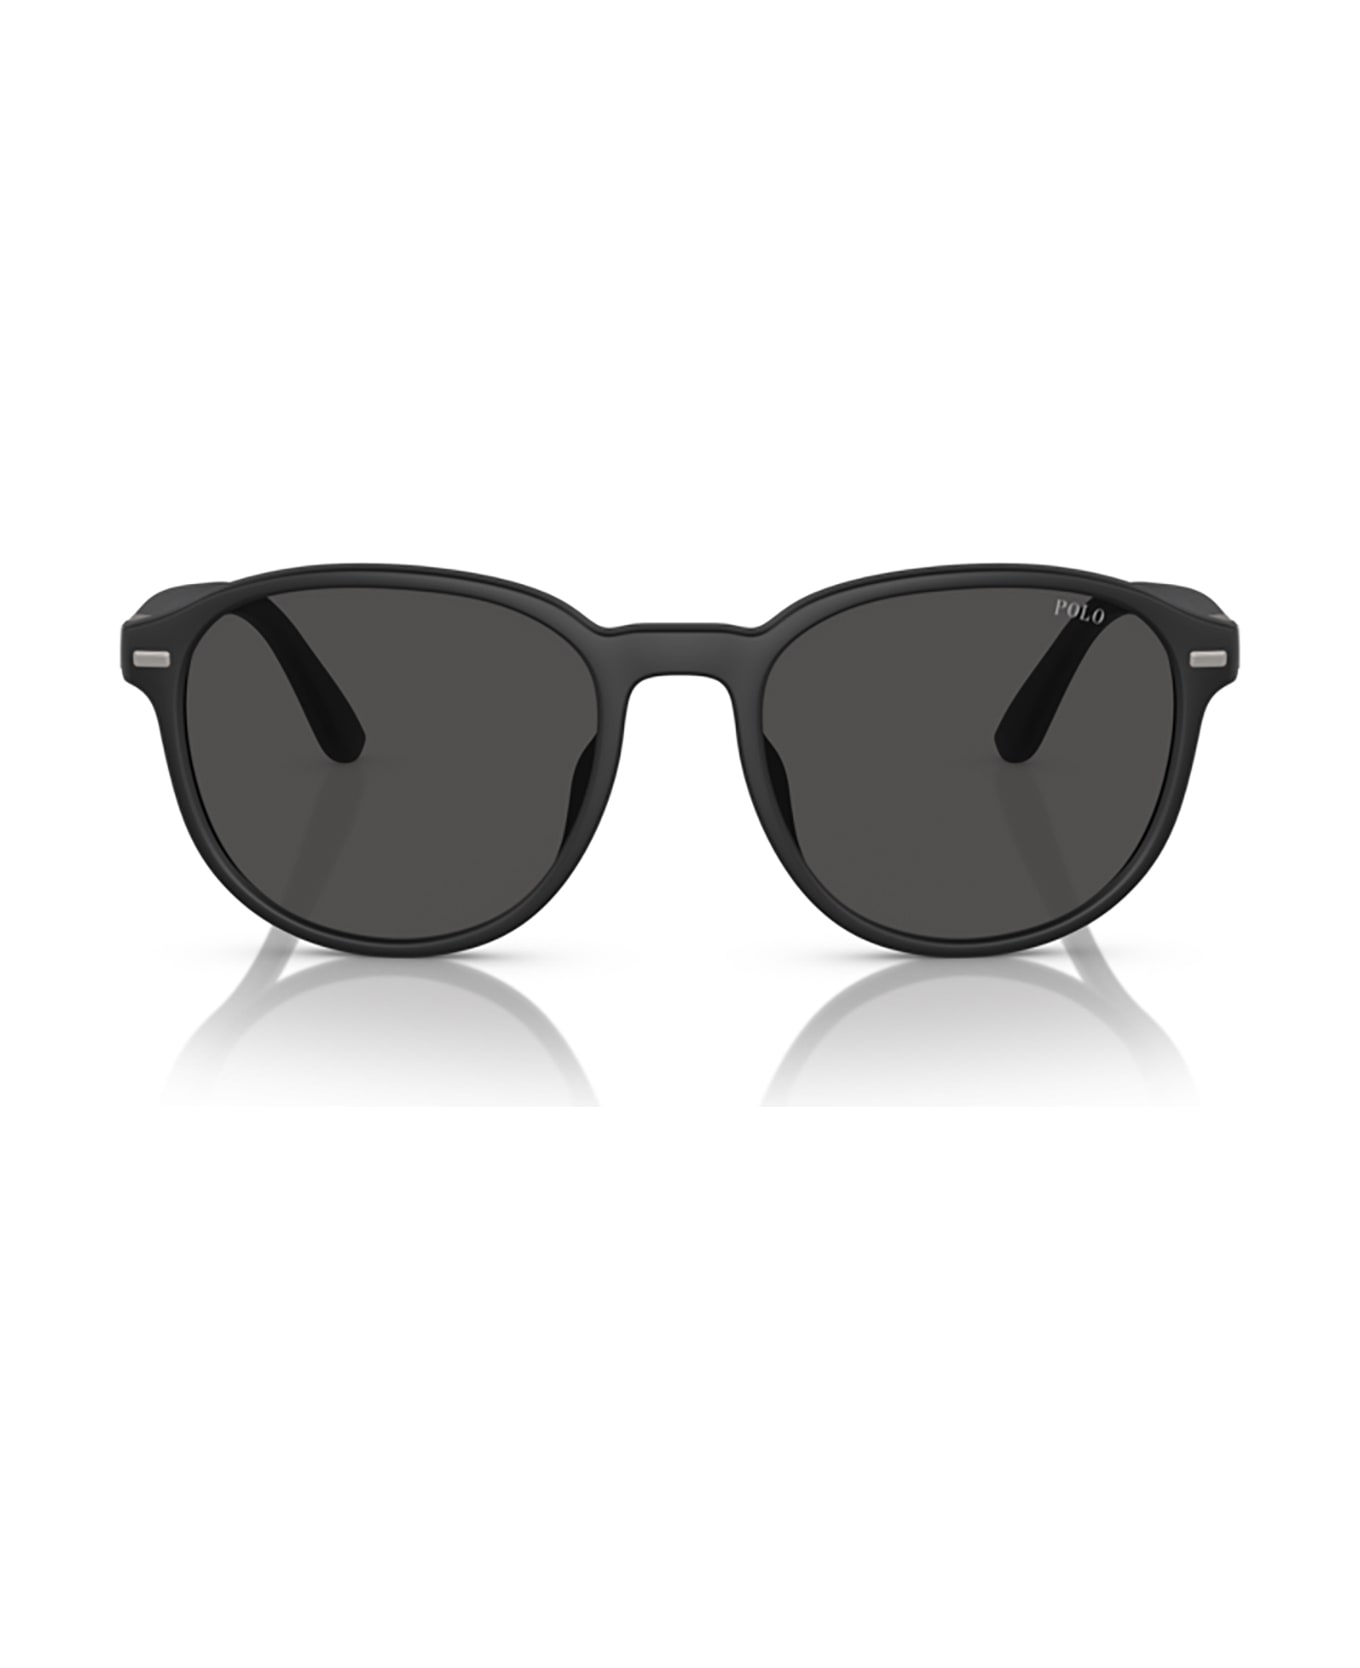 Polo Ralph Lauren Ph4207u Matte Black Sunglasses - Matte Black